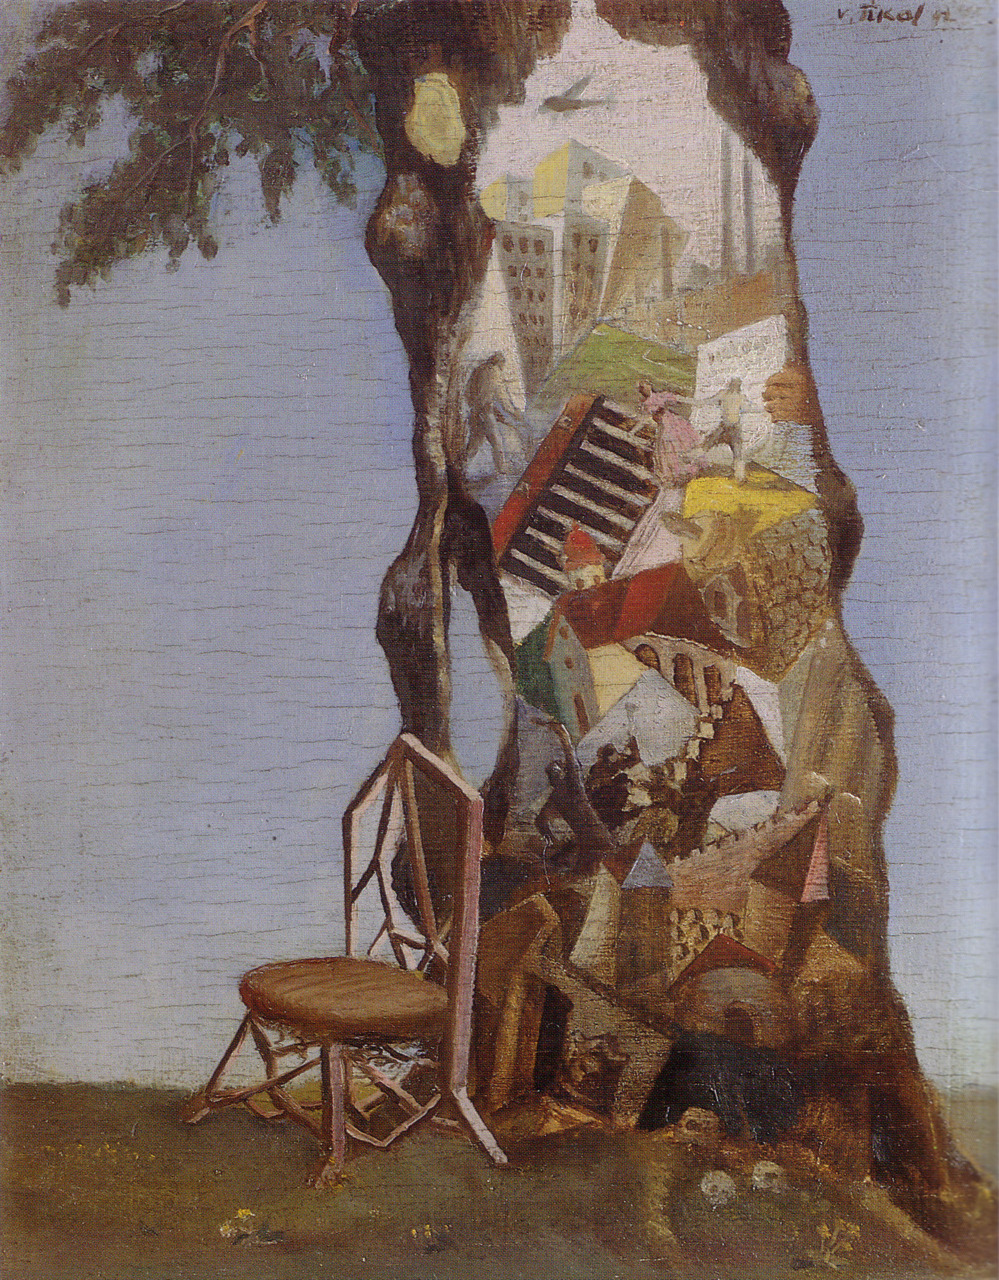 Tree of Life by Václav Tikal, 1924. Oil on plywood, 26 x 20 cm.